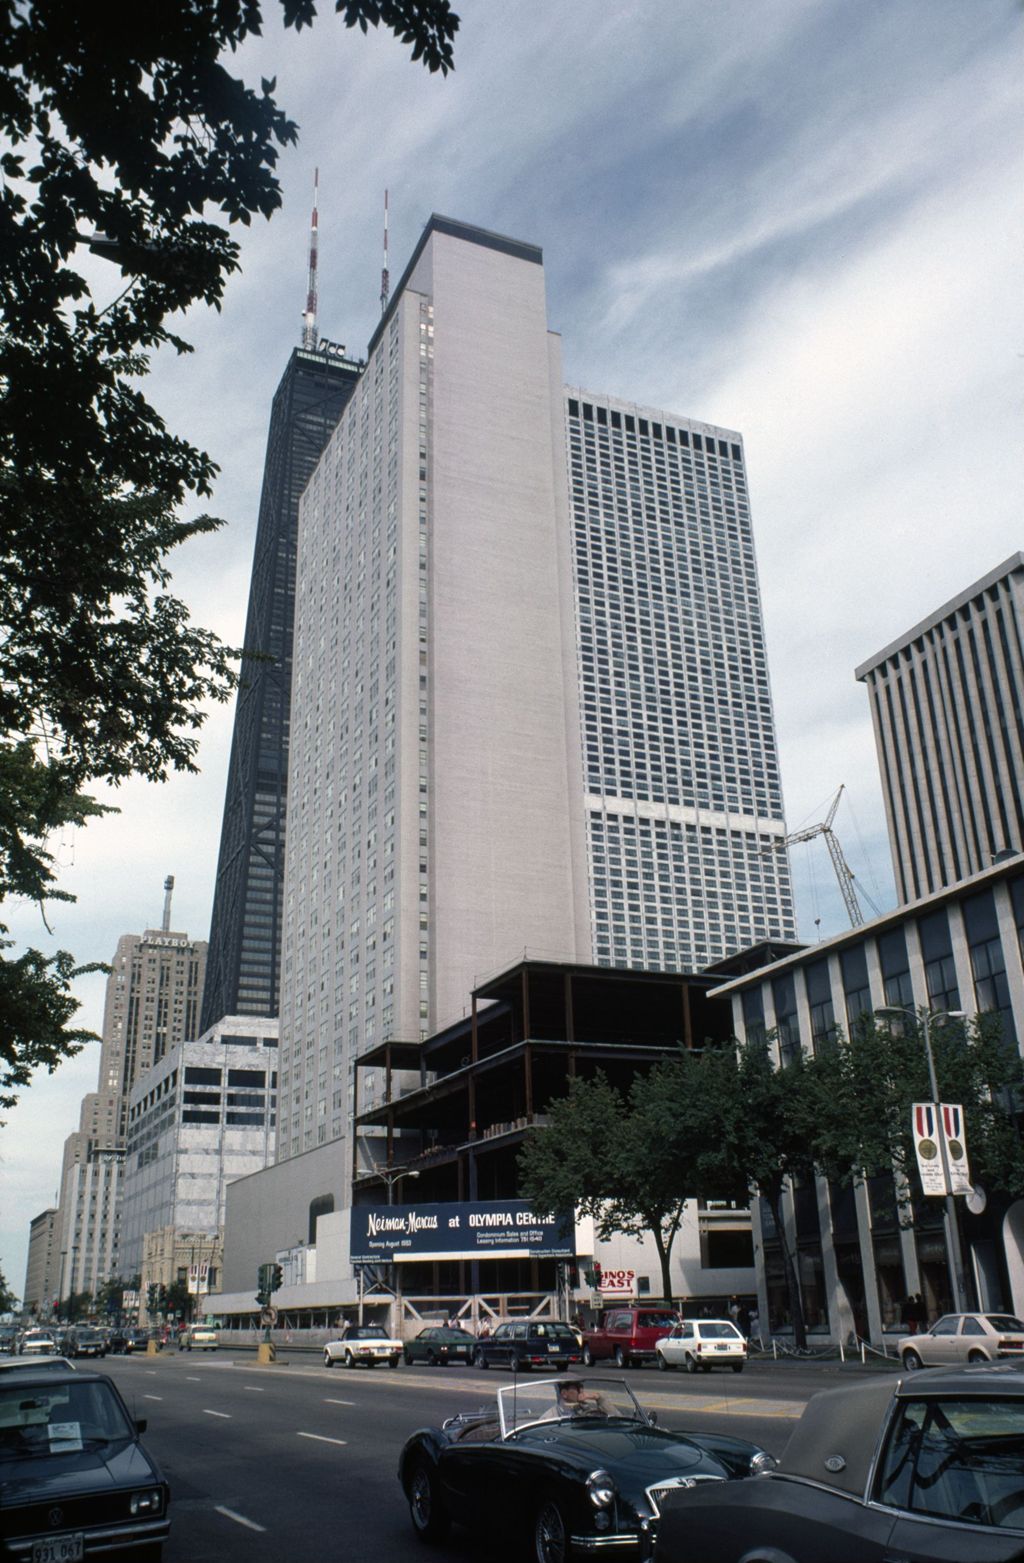 Miniature of North Michigan Avenue, high-rise buildings